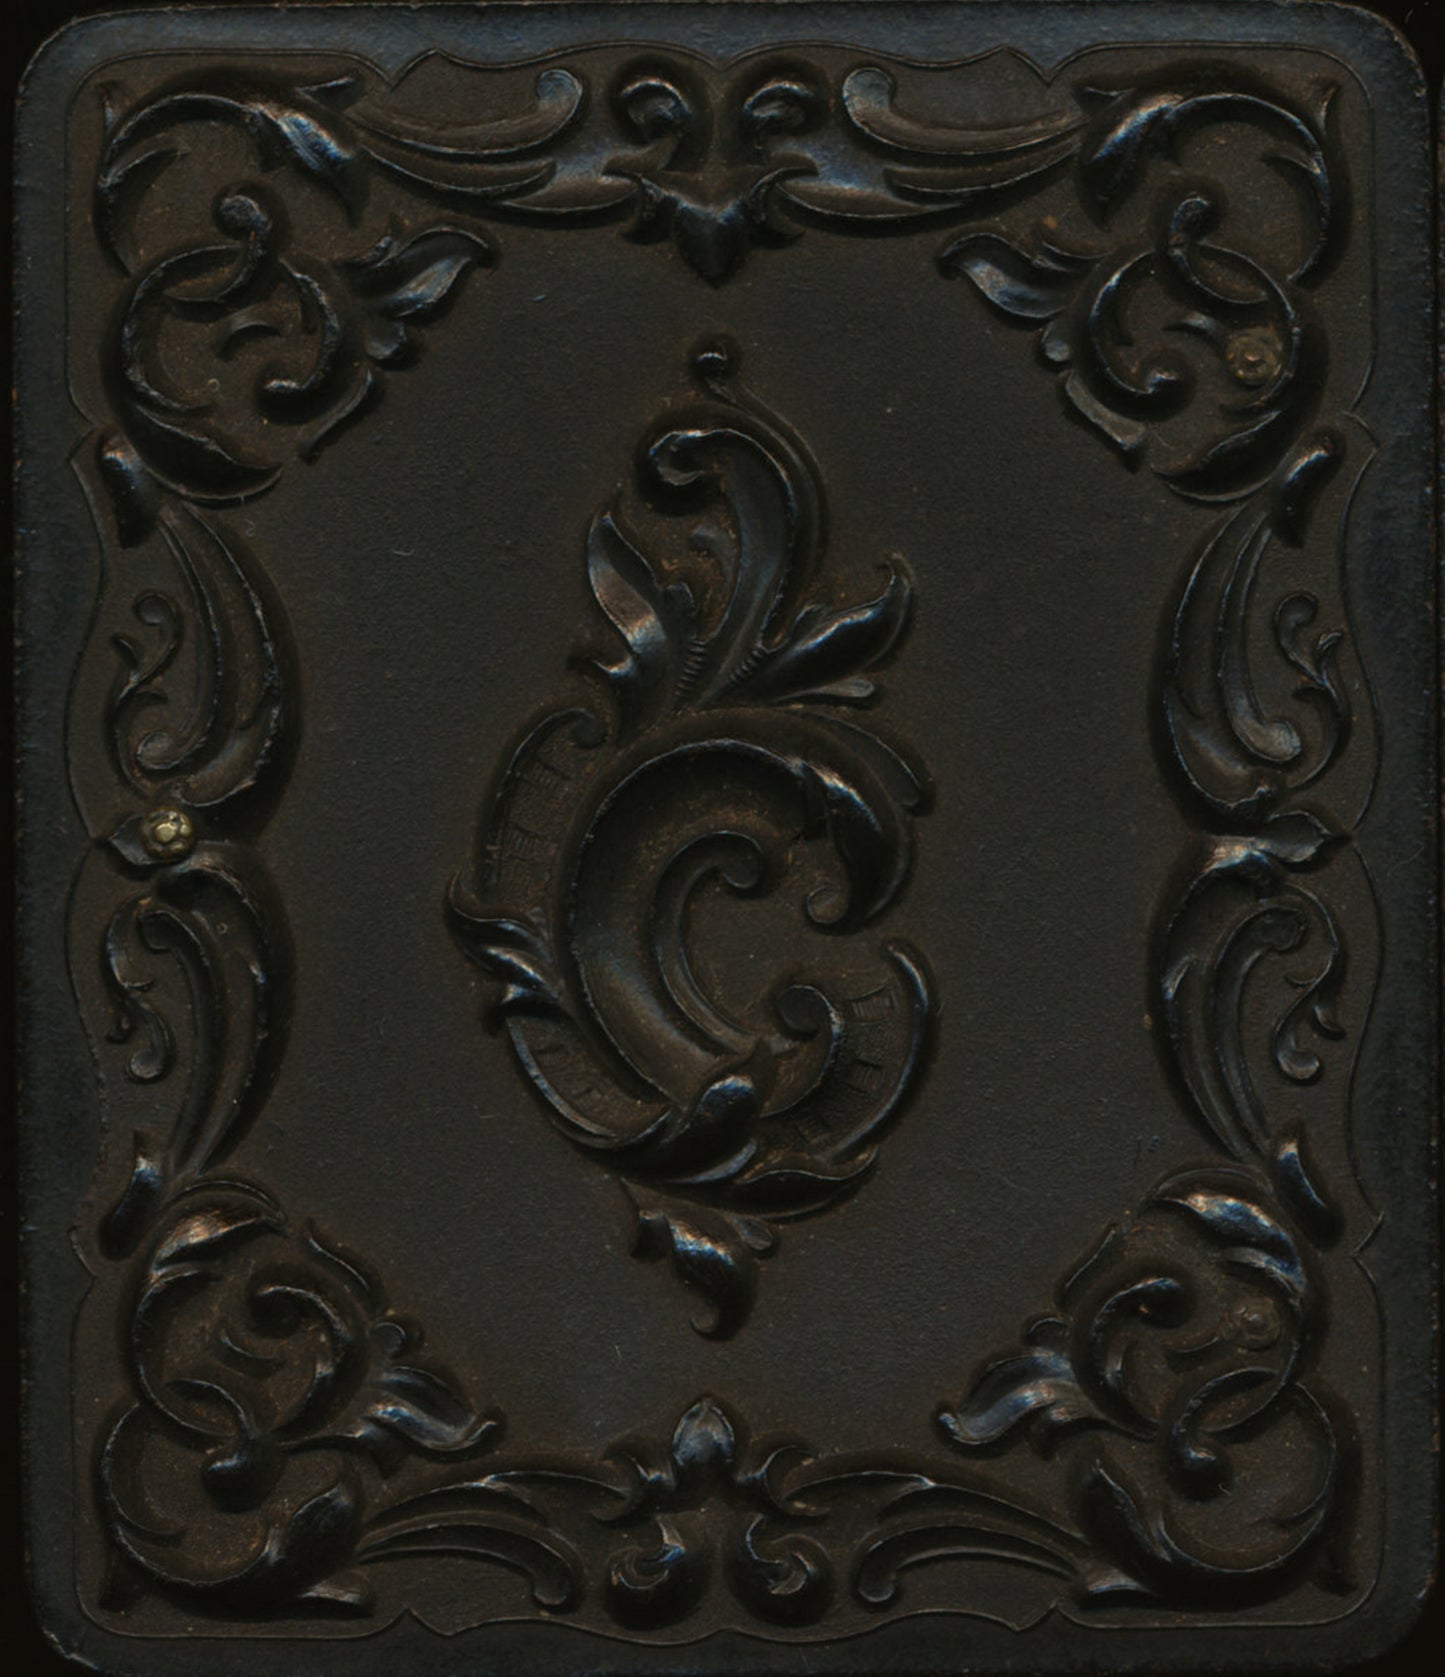 Engraved Antique Background